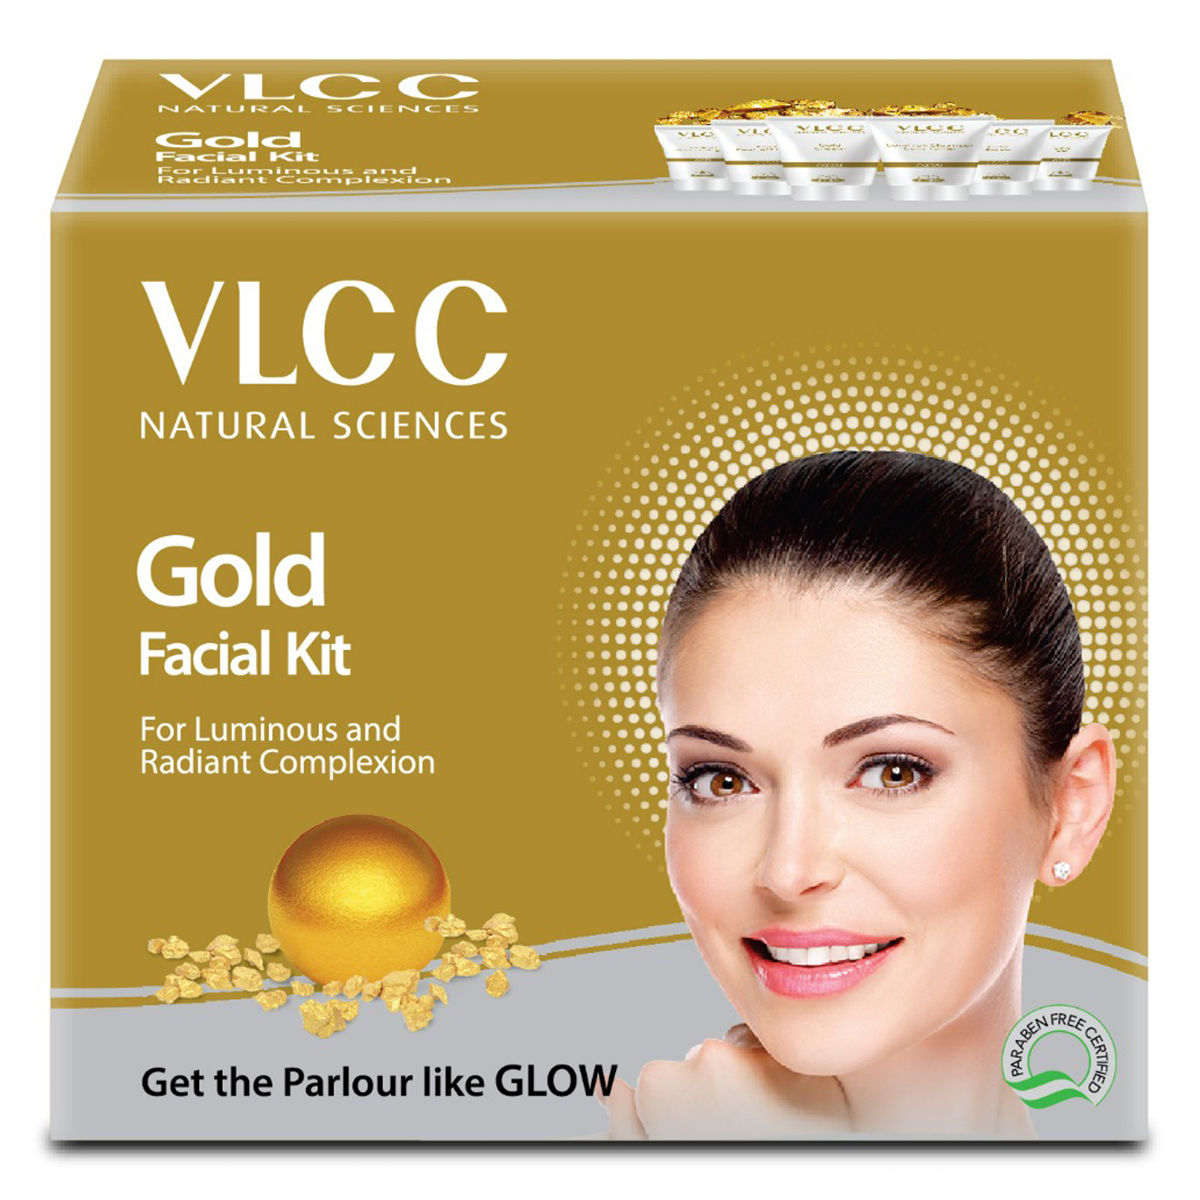 Buy VLCC Gold Facial Kit, 1 Count Online